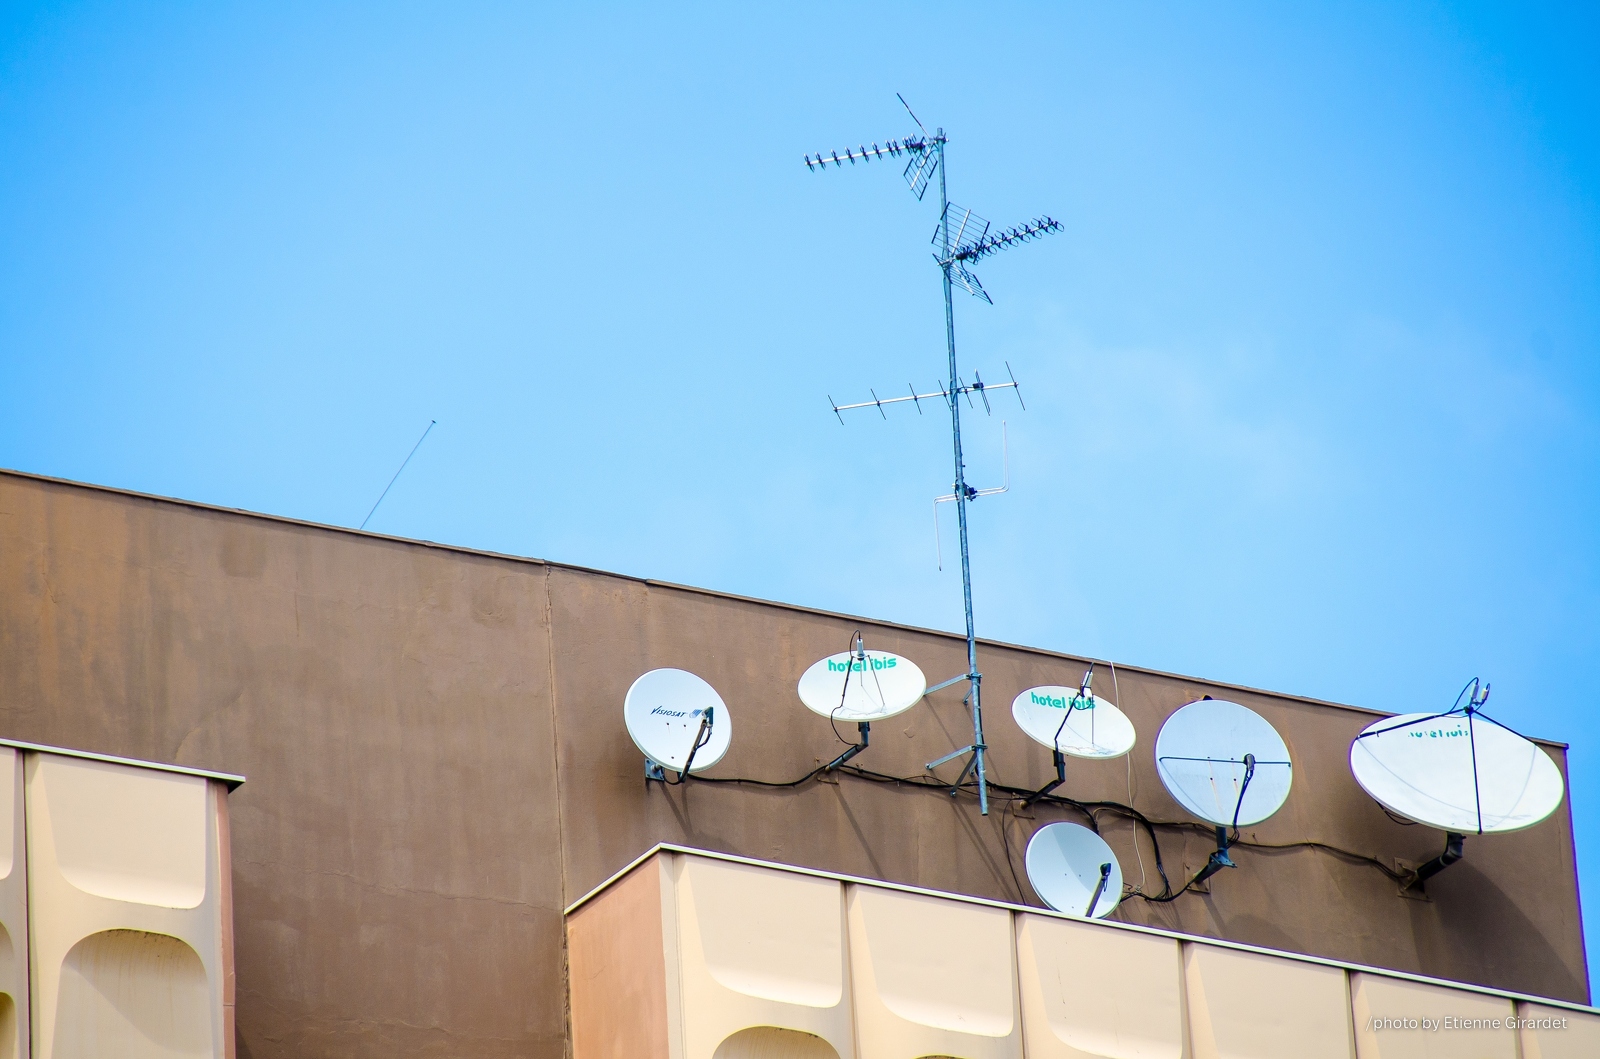 201207_17_DSC_1471-satellite-dish-rooftop-antenna-by-E-Girardet.jpg